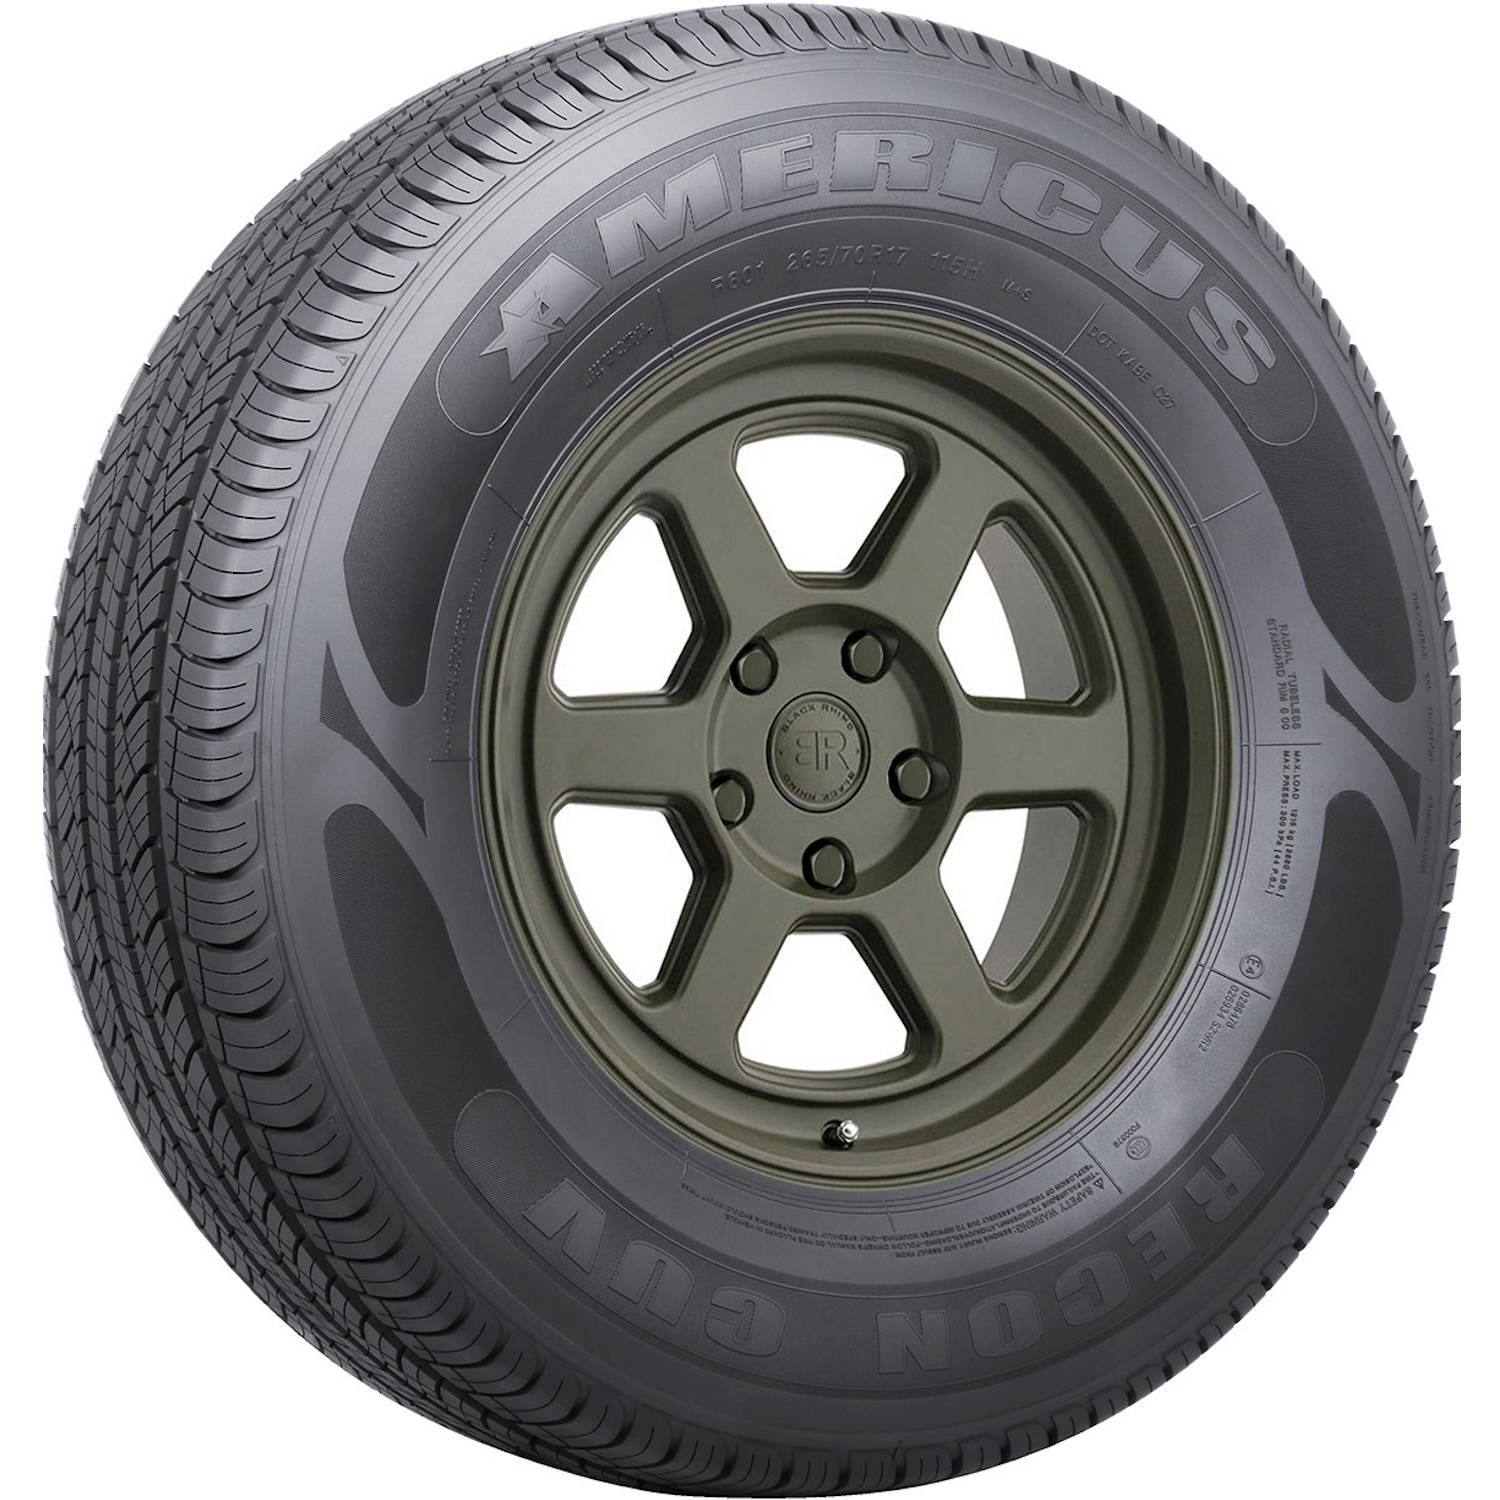 AMERICUS RECON CUV 225/60R18 (28.6X8.9R 18) Tires